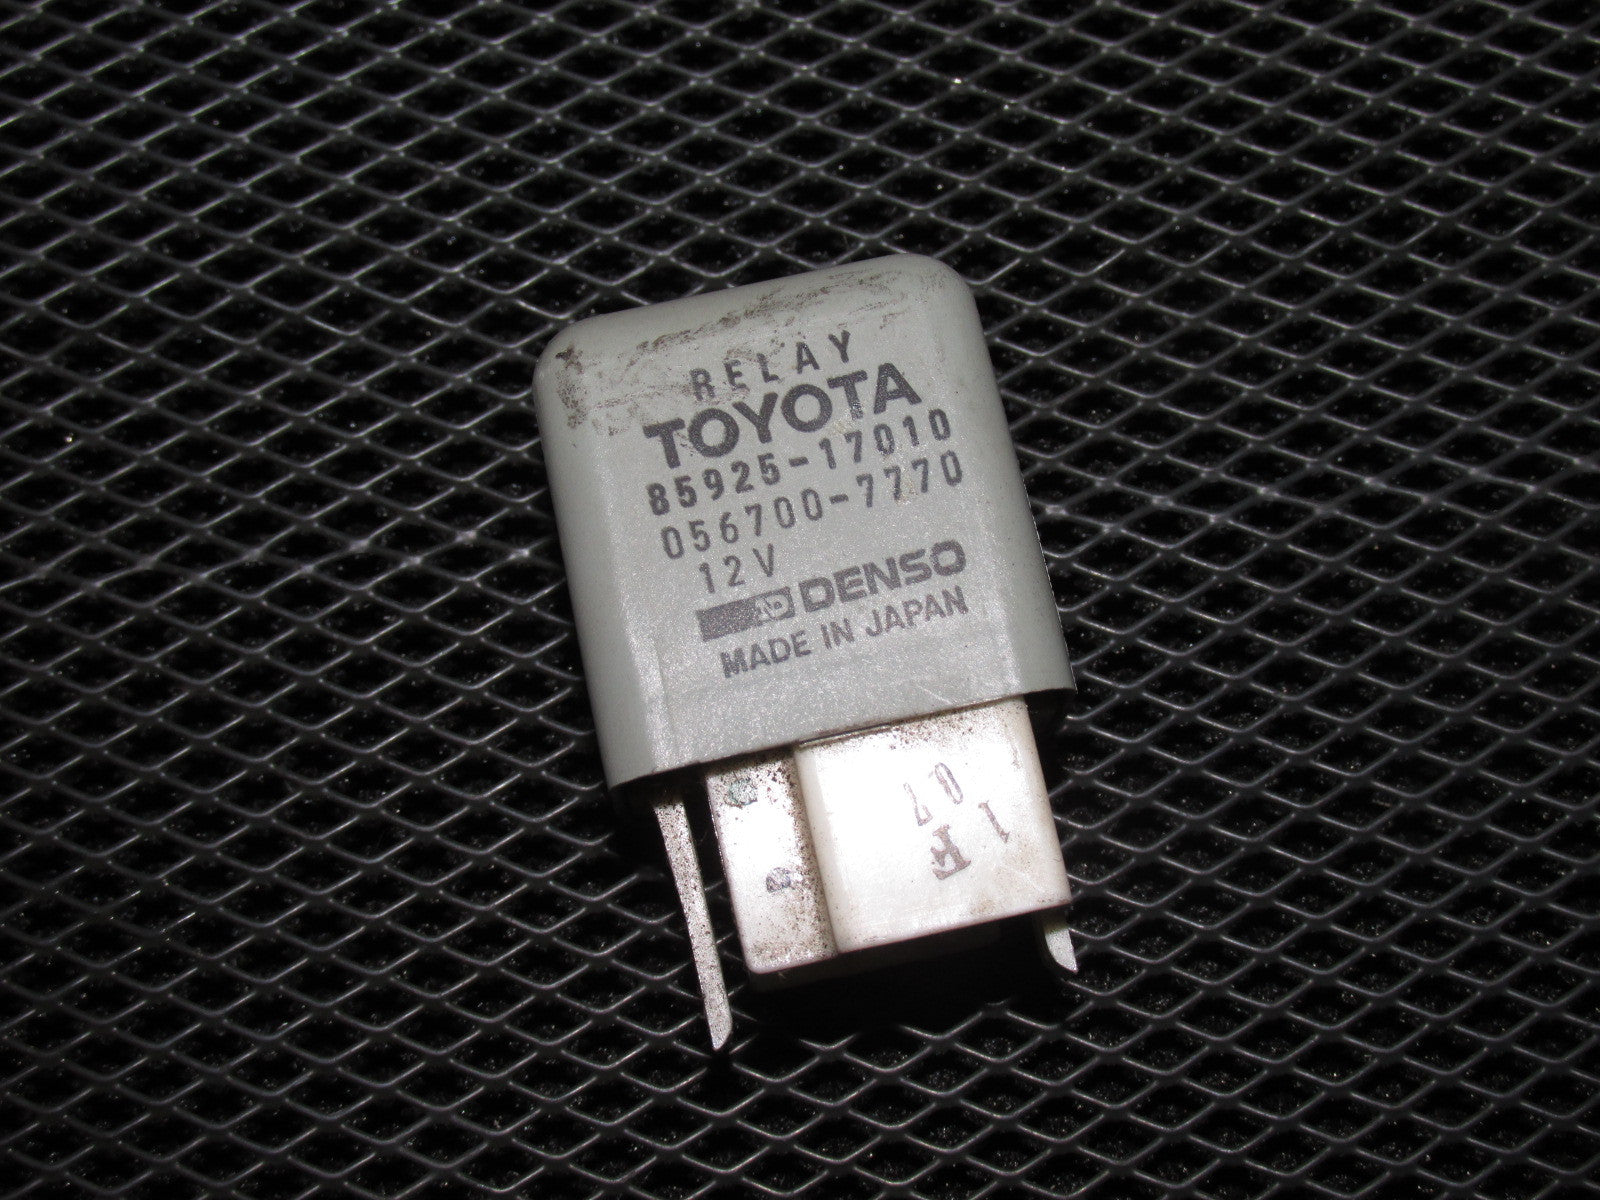 Toyota Universal Relay 85925-17010